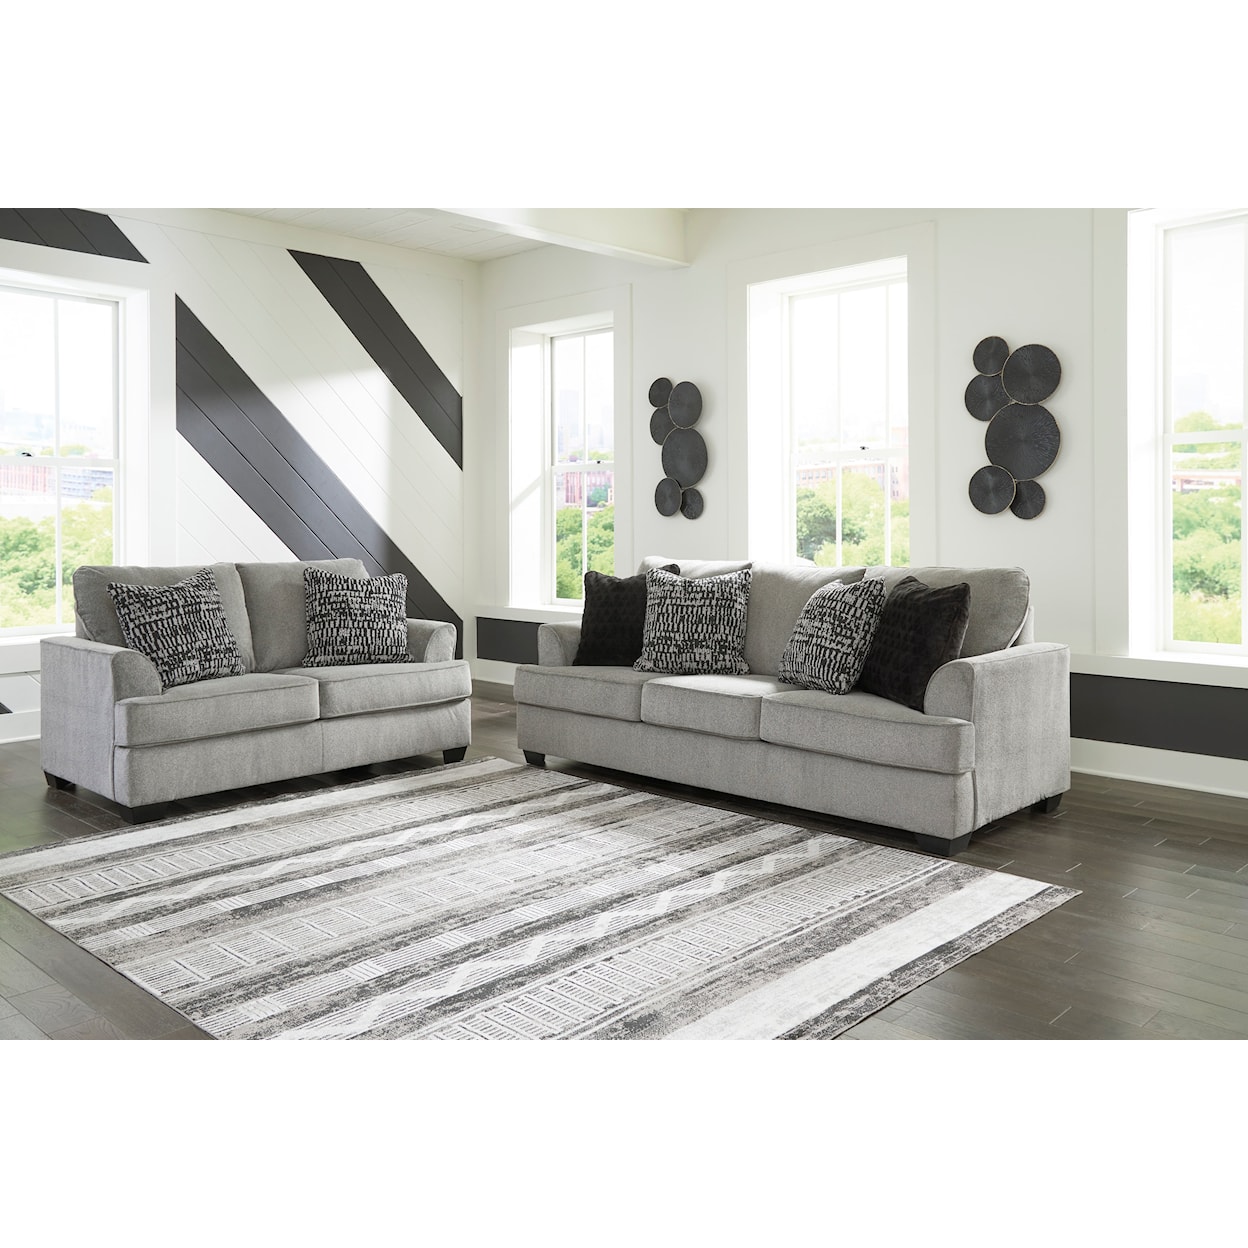 Ashley Furniture Signature Design Deakin 2-Piece Living Room Set